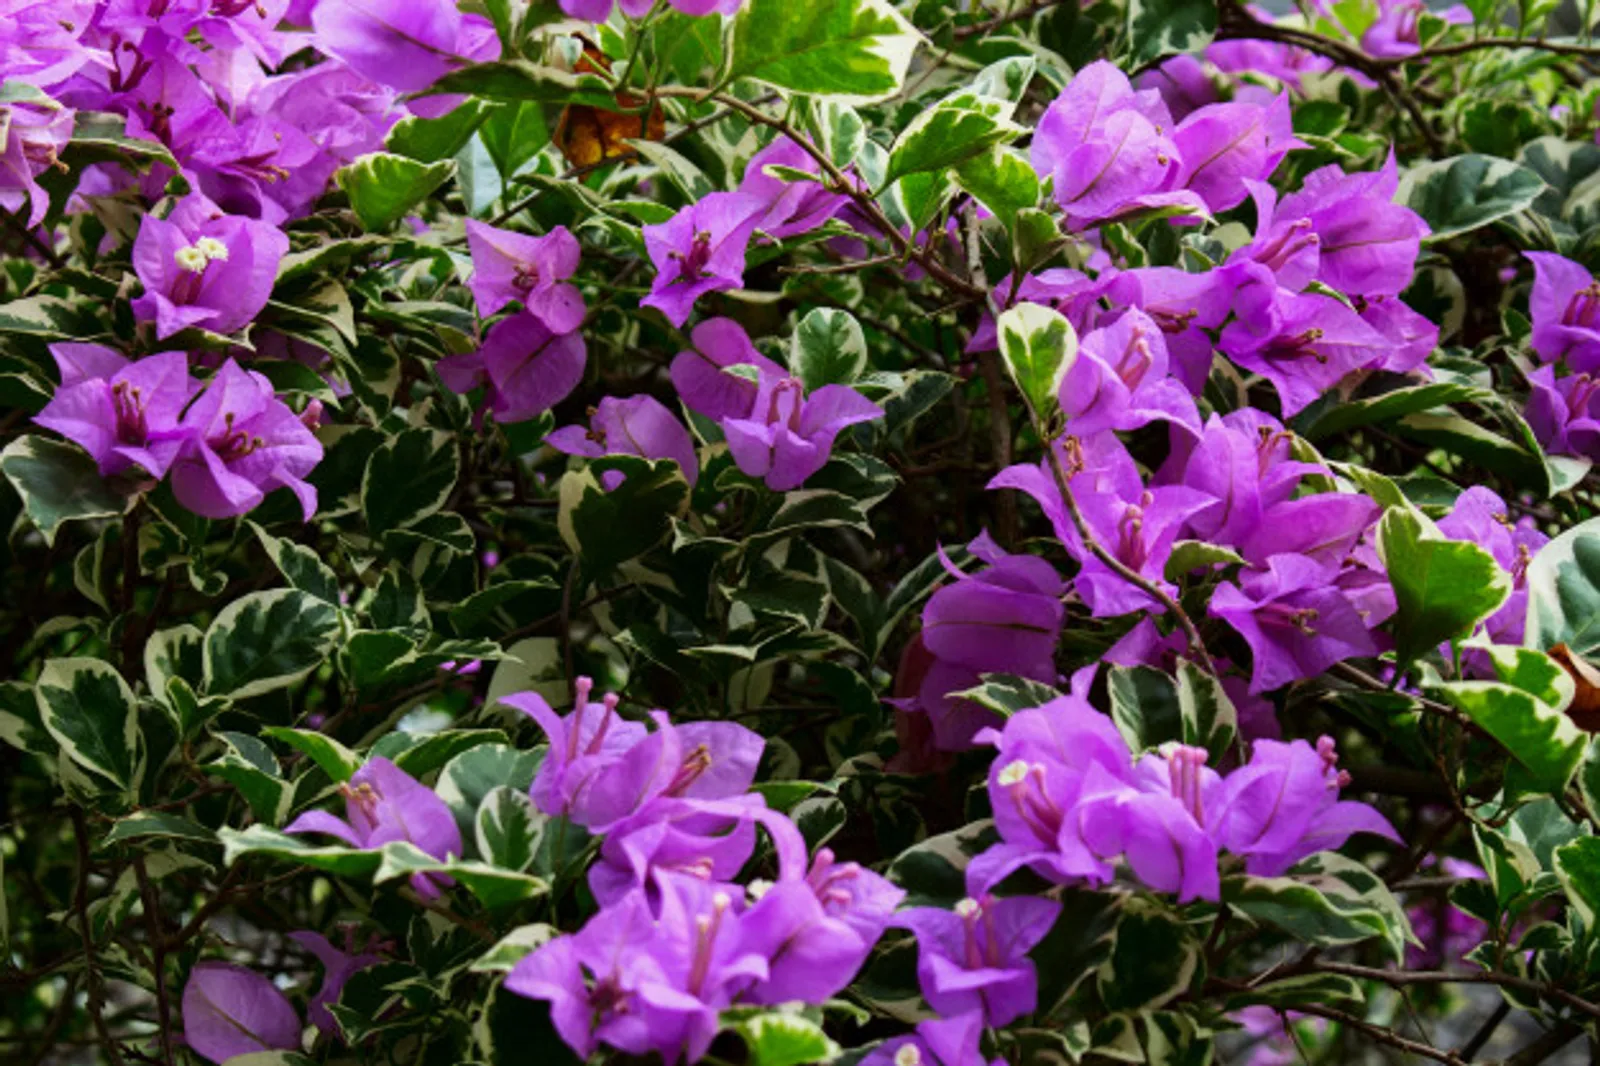 Paling Indah! Ini 9 Jenis Tanaman Bunga Untuk Mempercantik Rumahmu